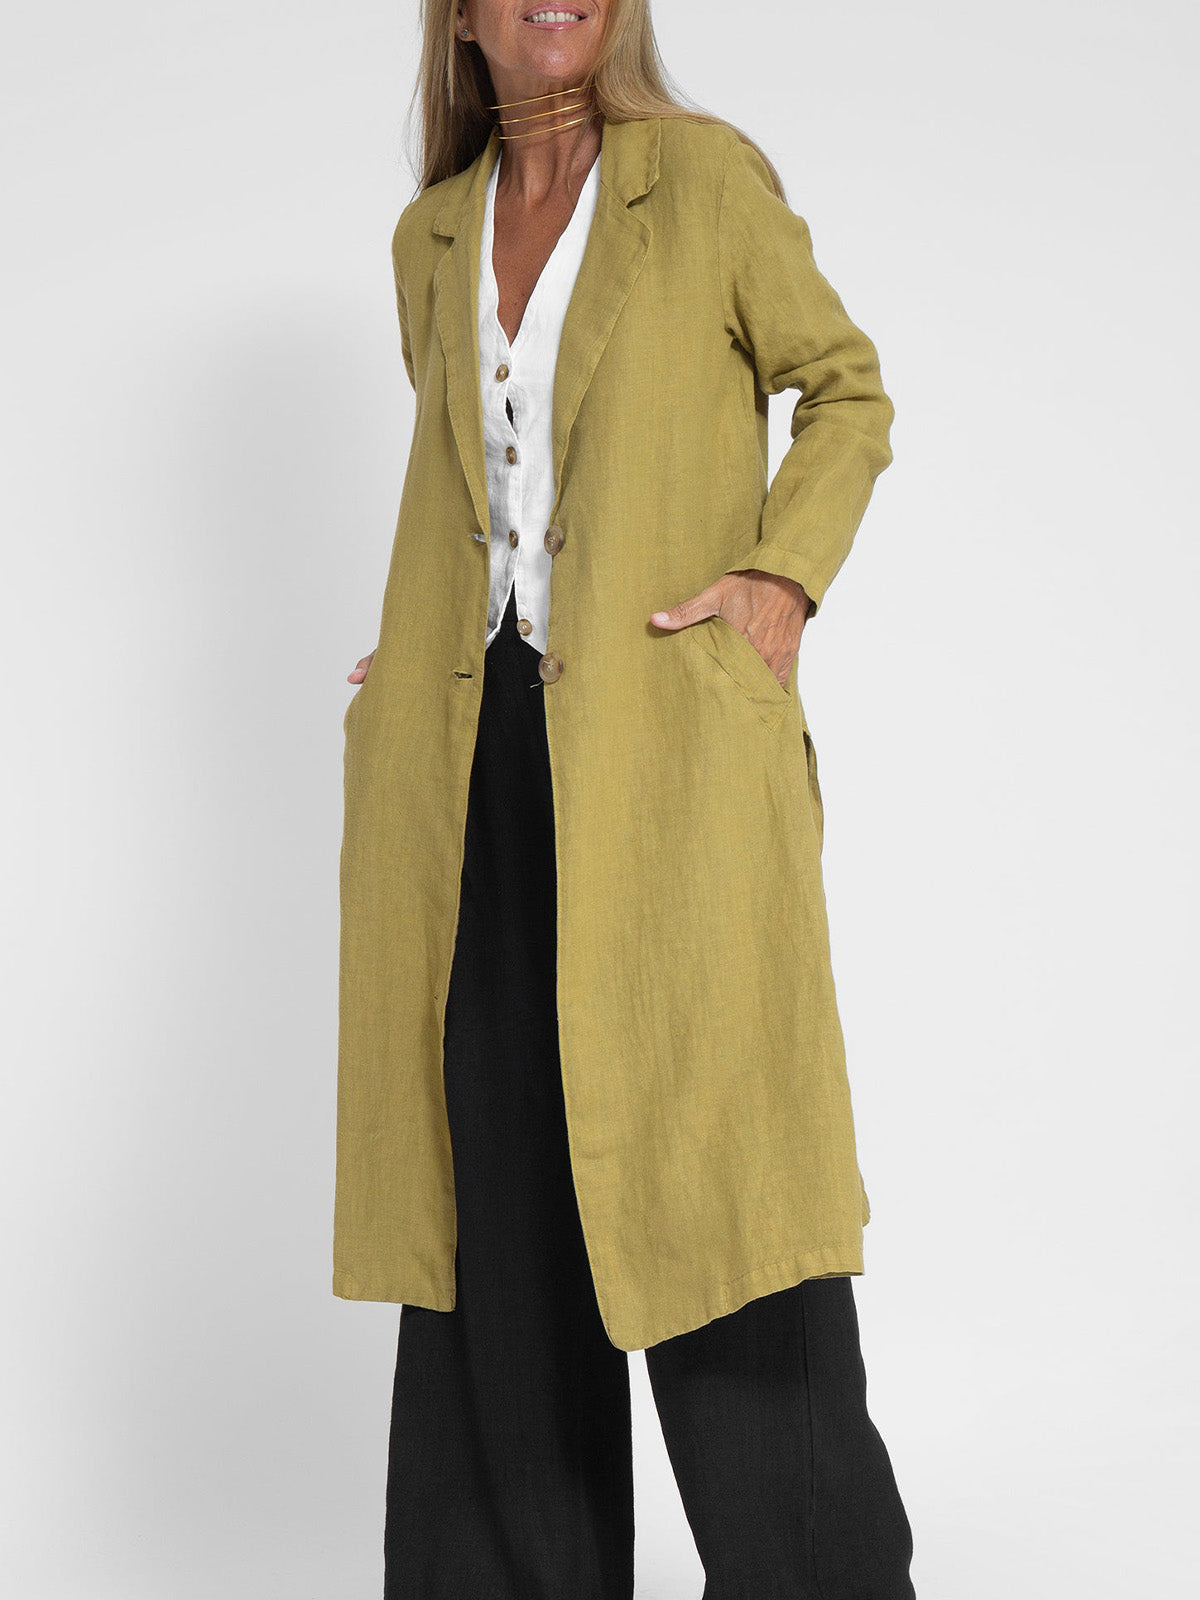 NTG Fad Blazers & Jackets Cotton Linen Suit Collar Pocket Jacket